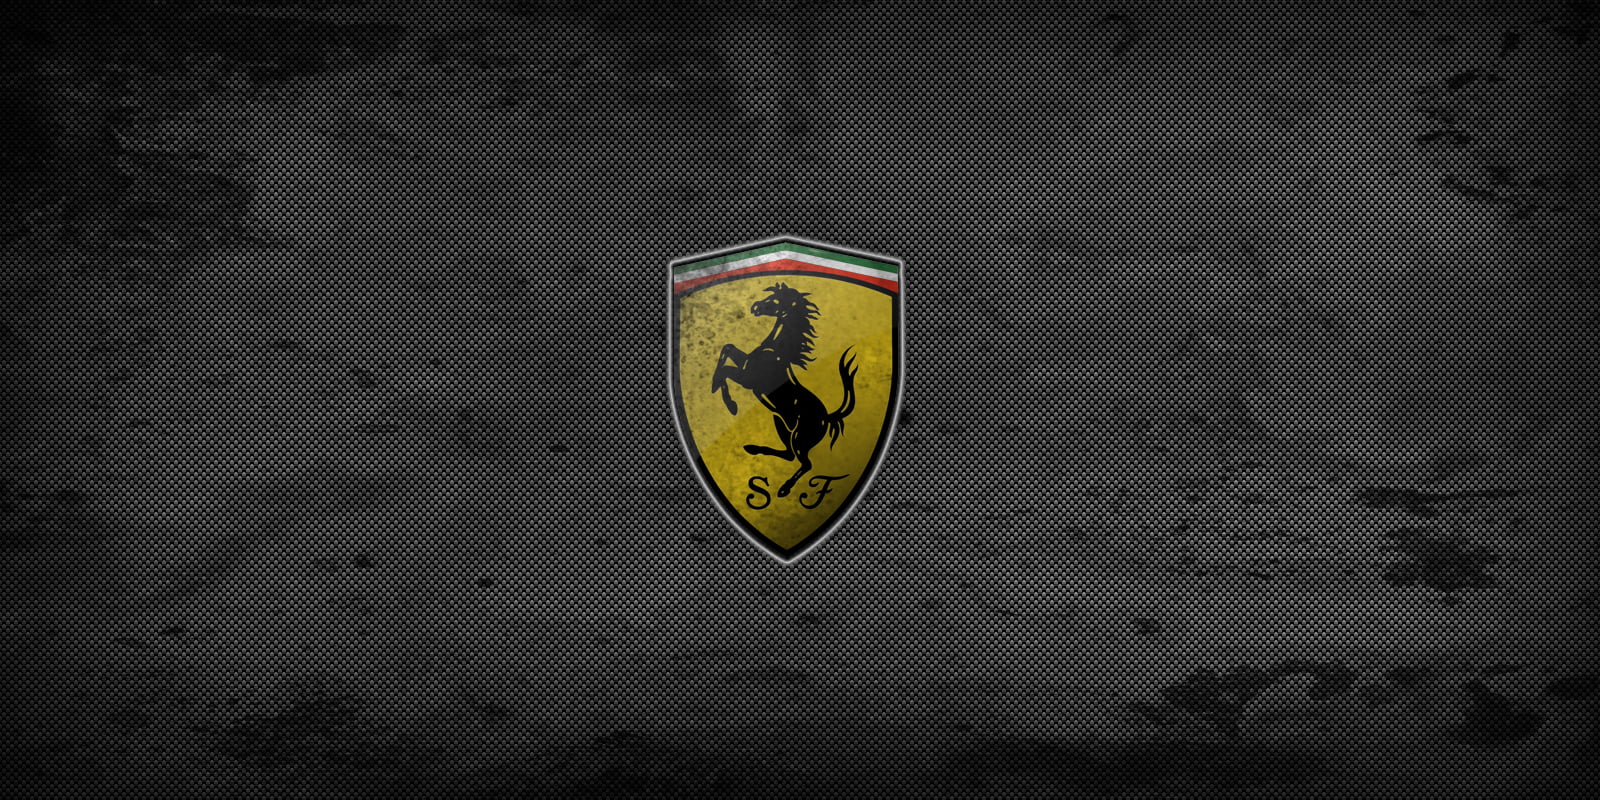 Ferrari logo  with gray background